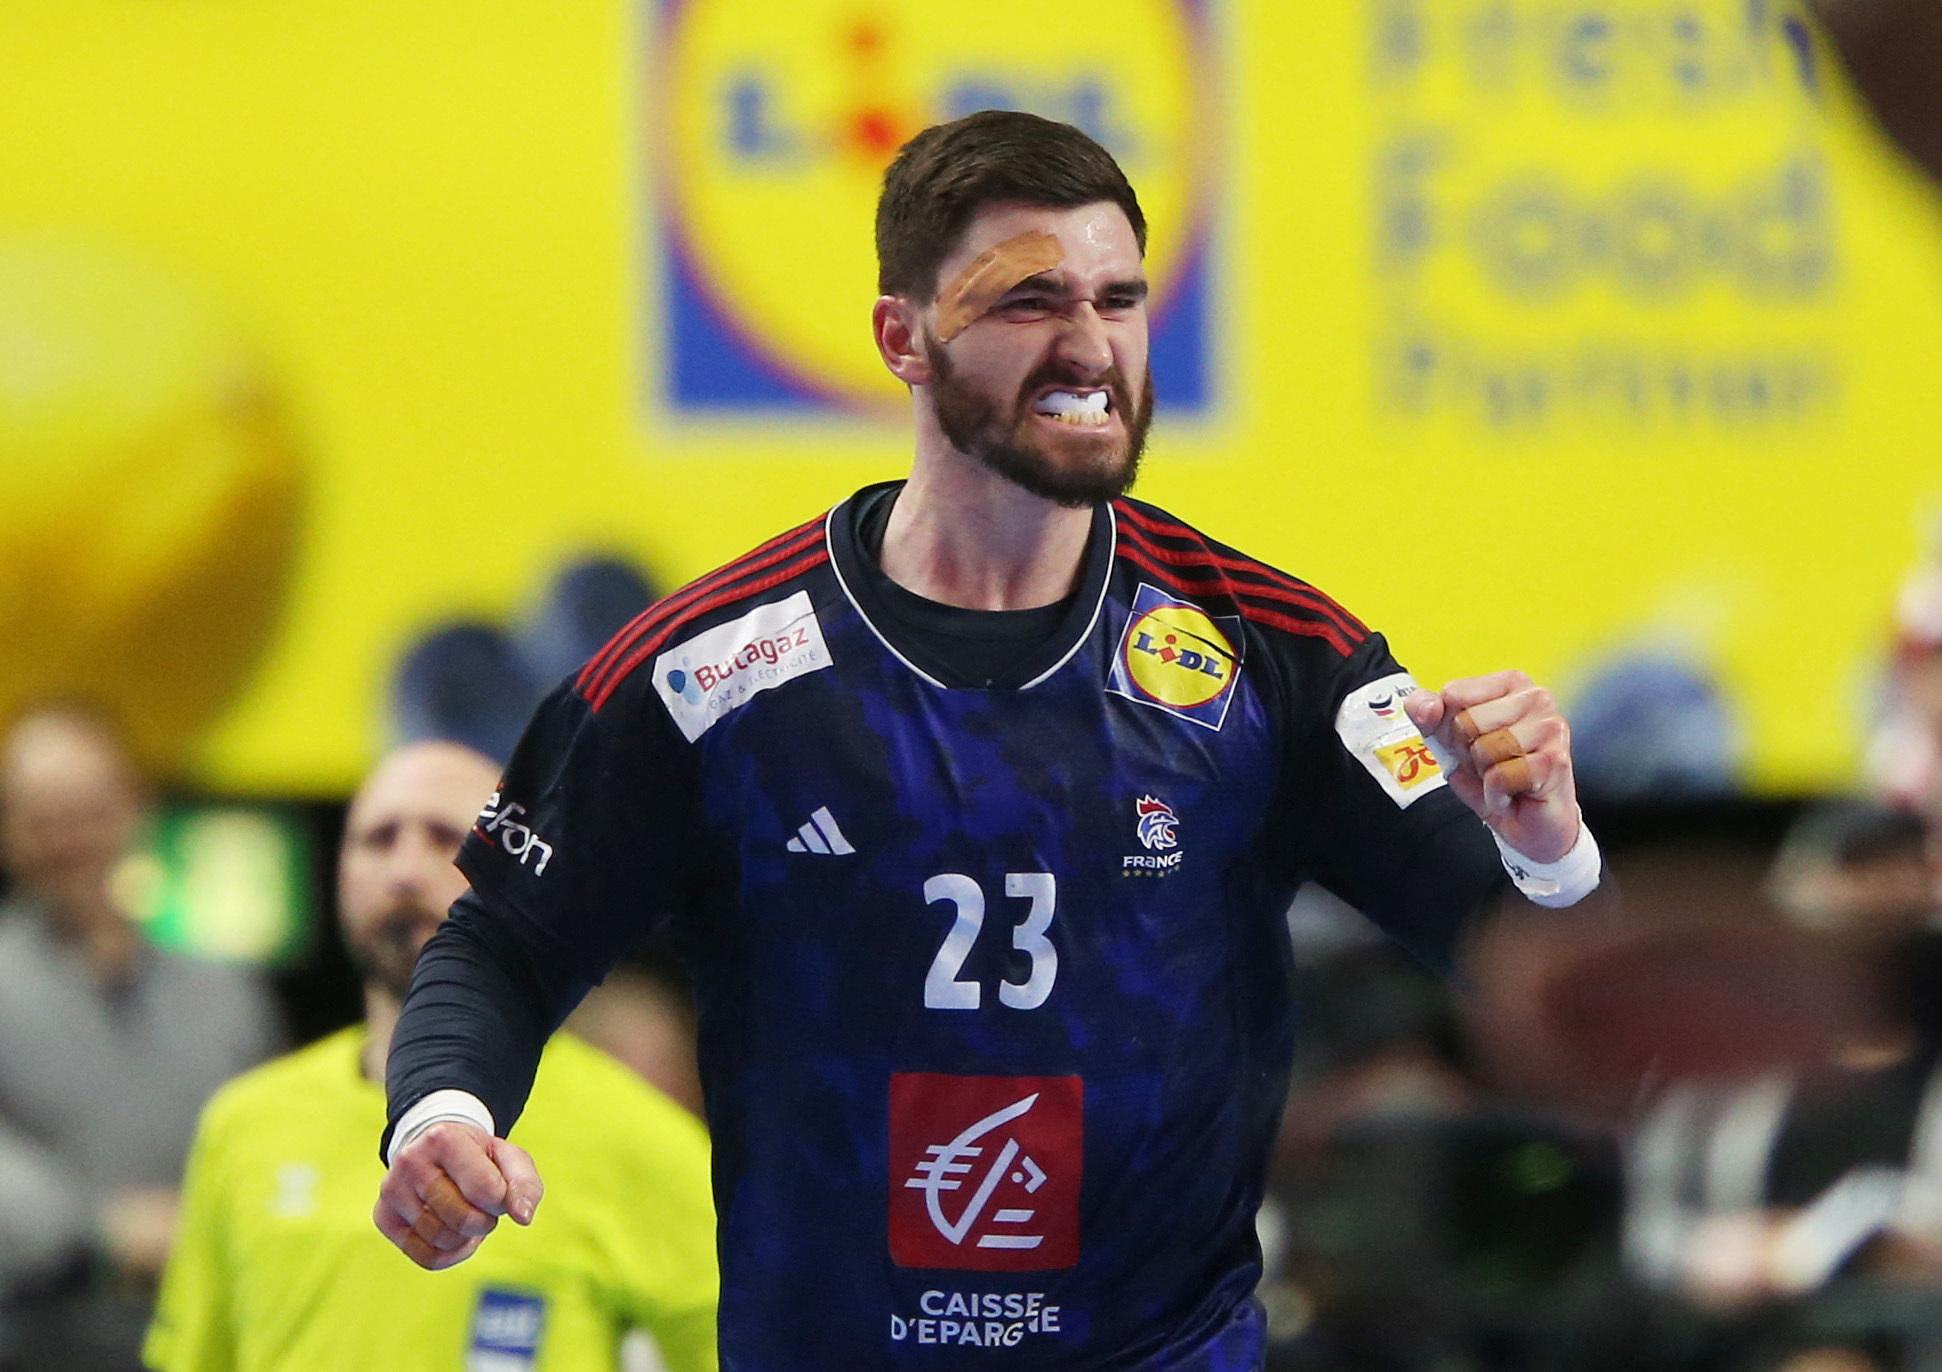 Euro handball: “It’s magical” for Ludovic Fabregas